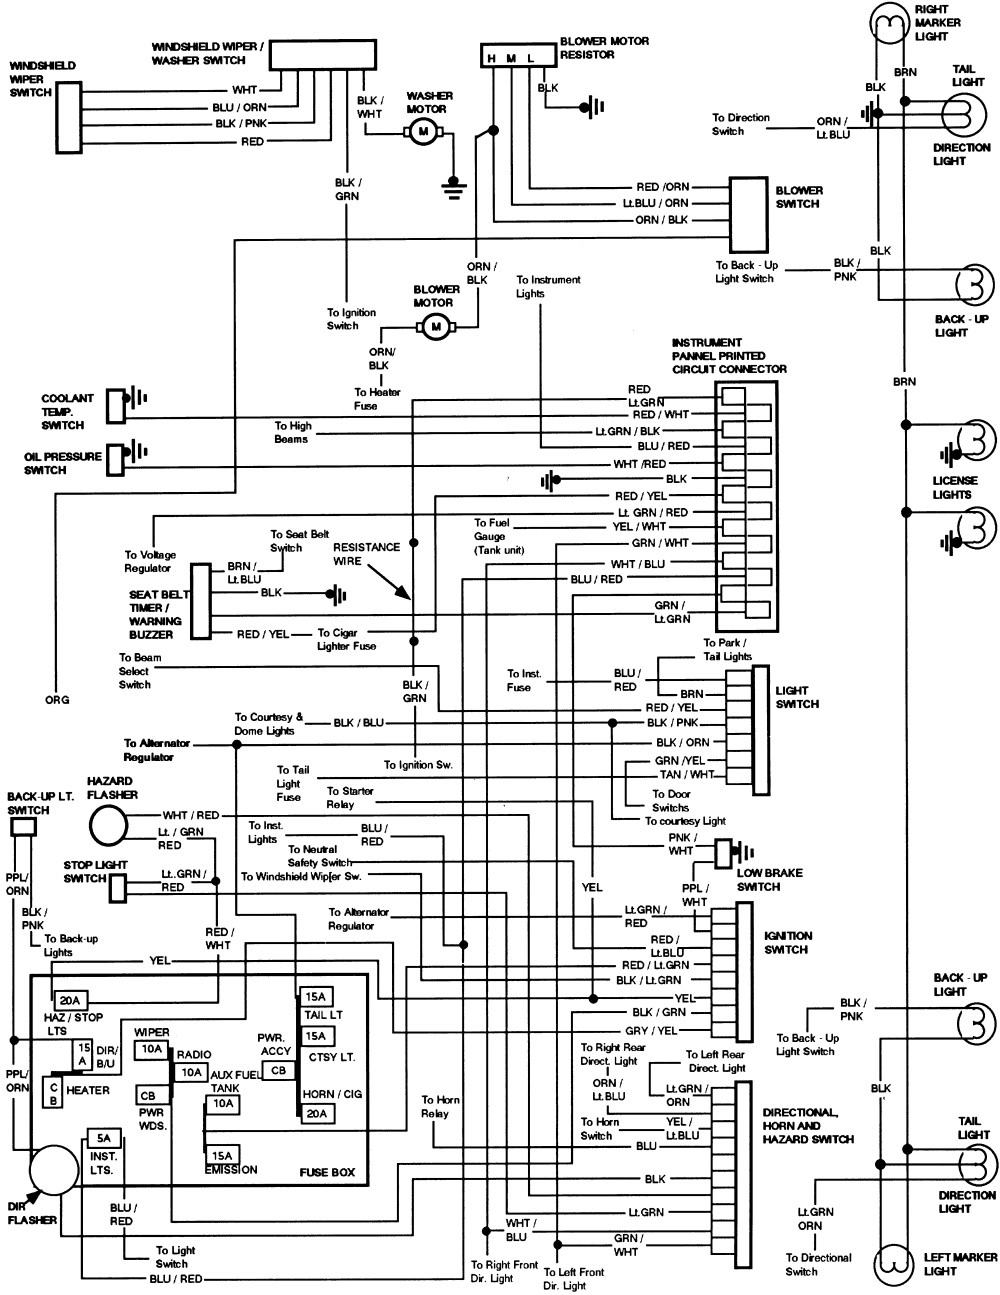 2000 Ford F150 Starter Solenoid Wiring Diagram | Wiring Diagram - Ford F250 Starter Solenoid Wiring Diagram